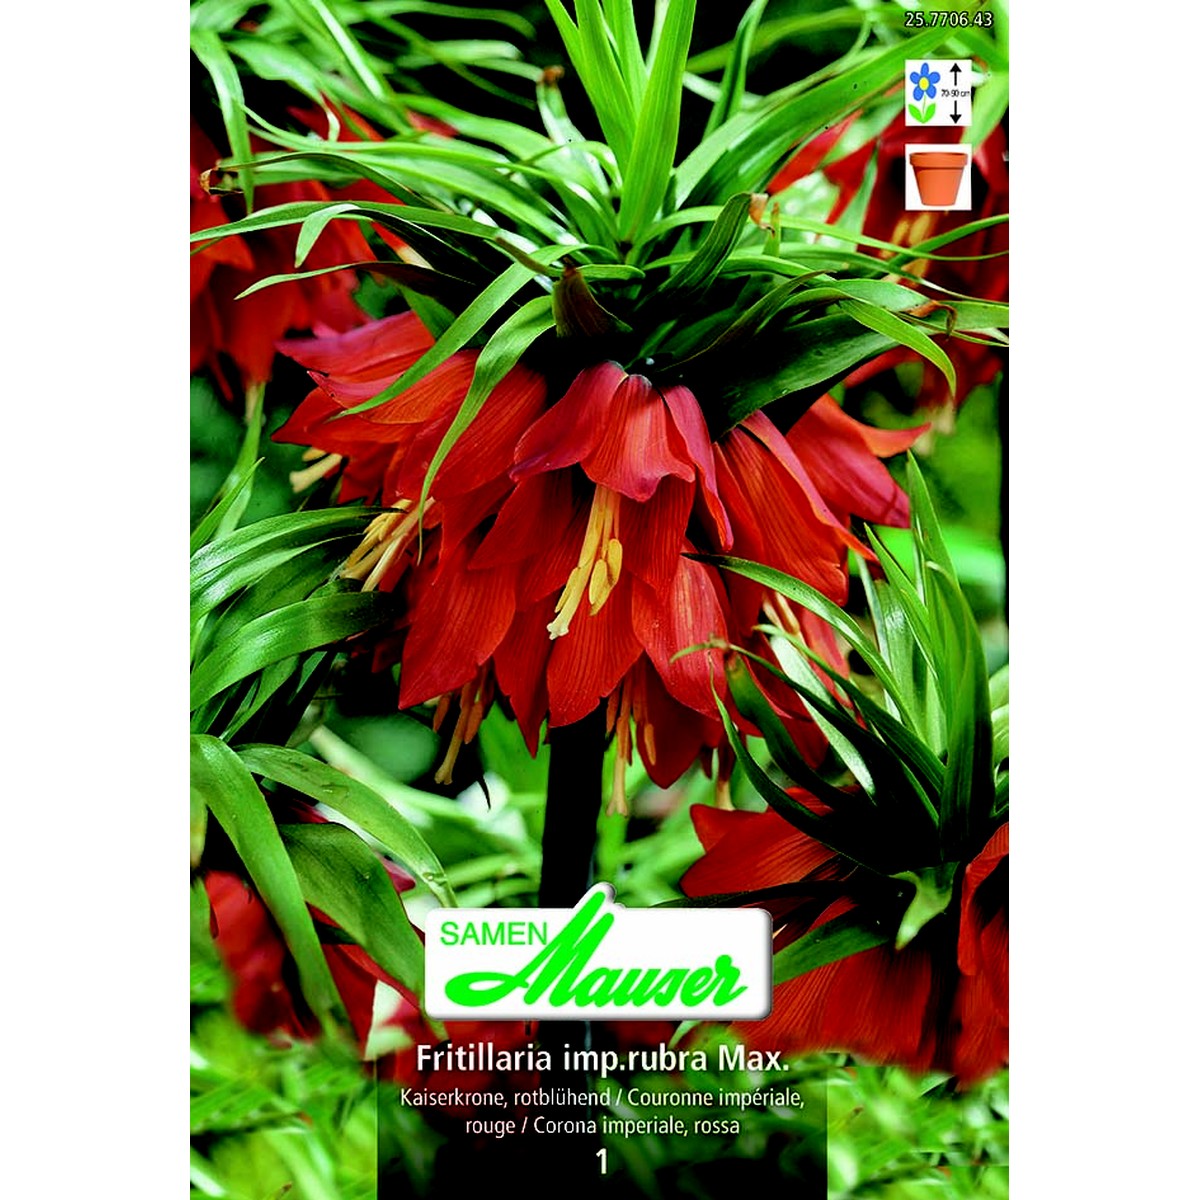   Fritillaria imp rubra Maxima 1  20/24